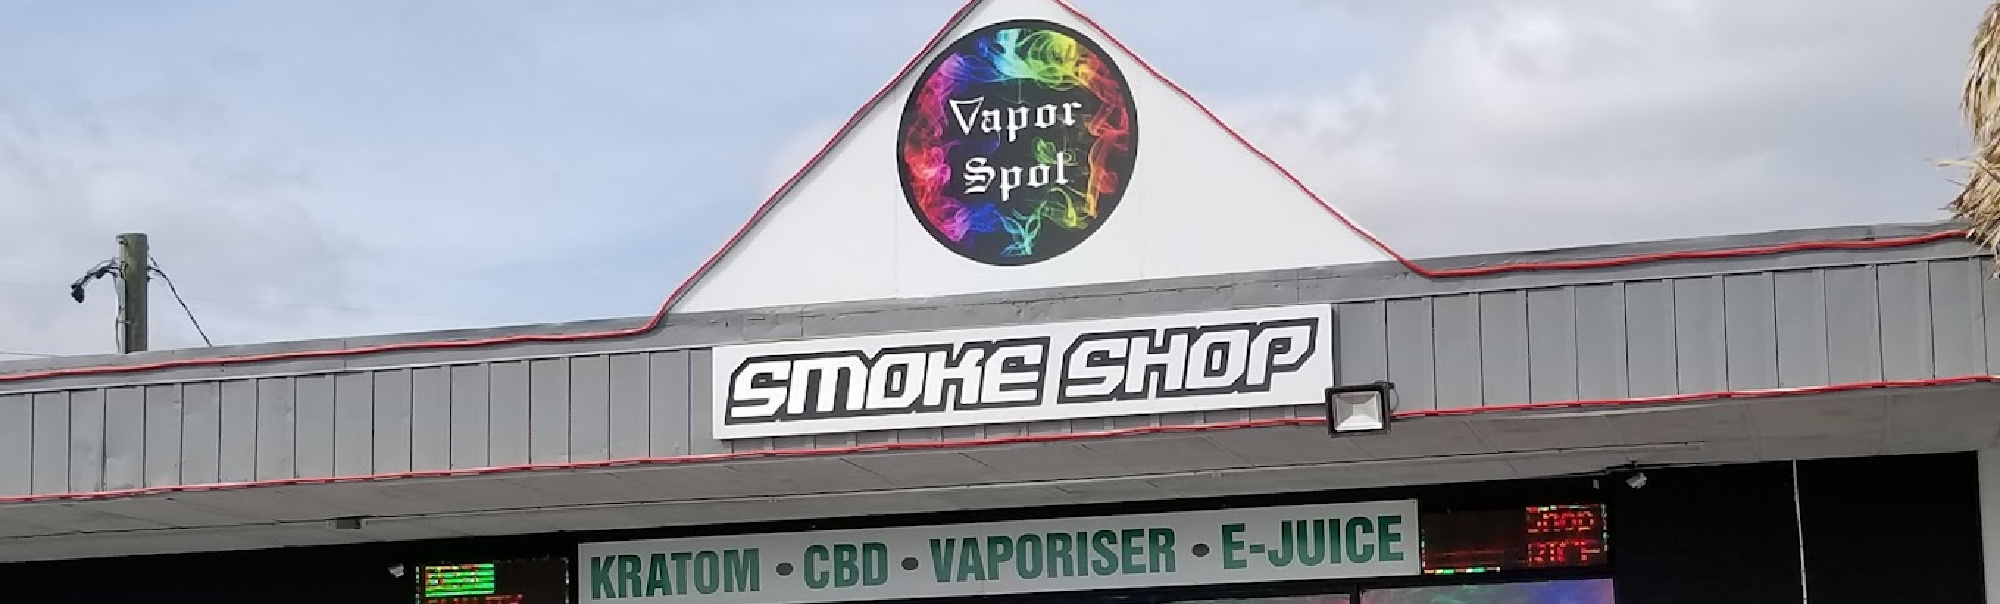 image of vapor spot & smoke shop in ocala fl